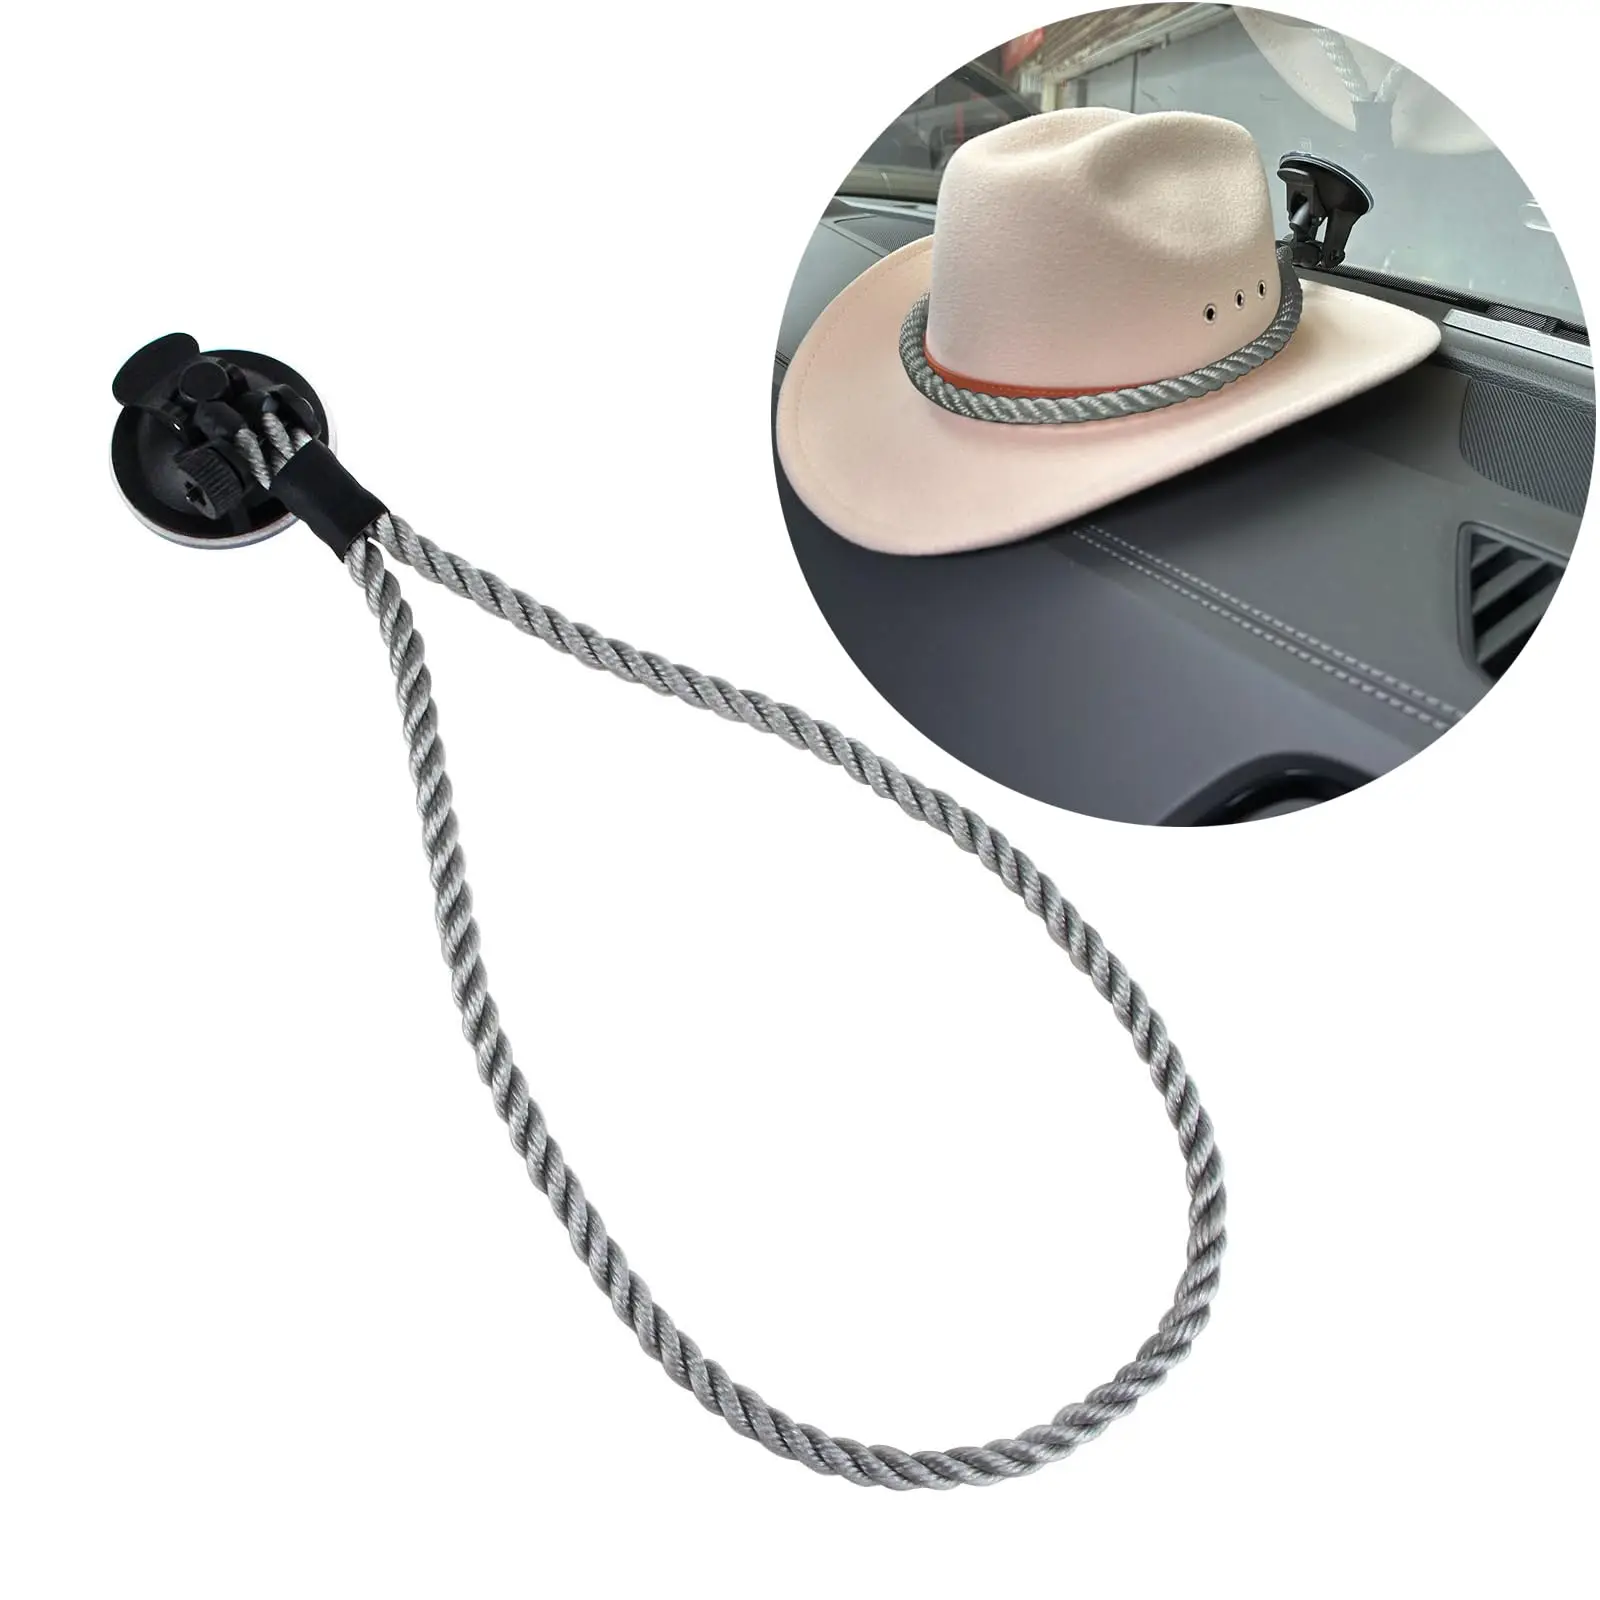 

Multi-Functional Storage Holder Rack For Truck Hats Hanger Car Accessory Car Mounted Cowboy Hat Holder